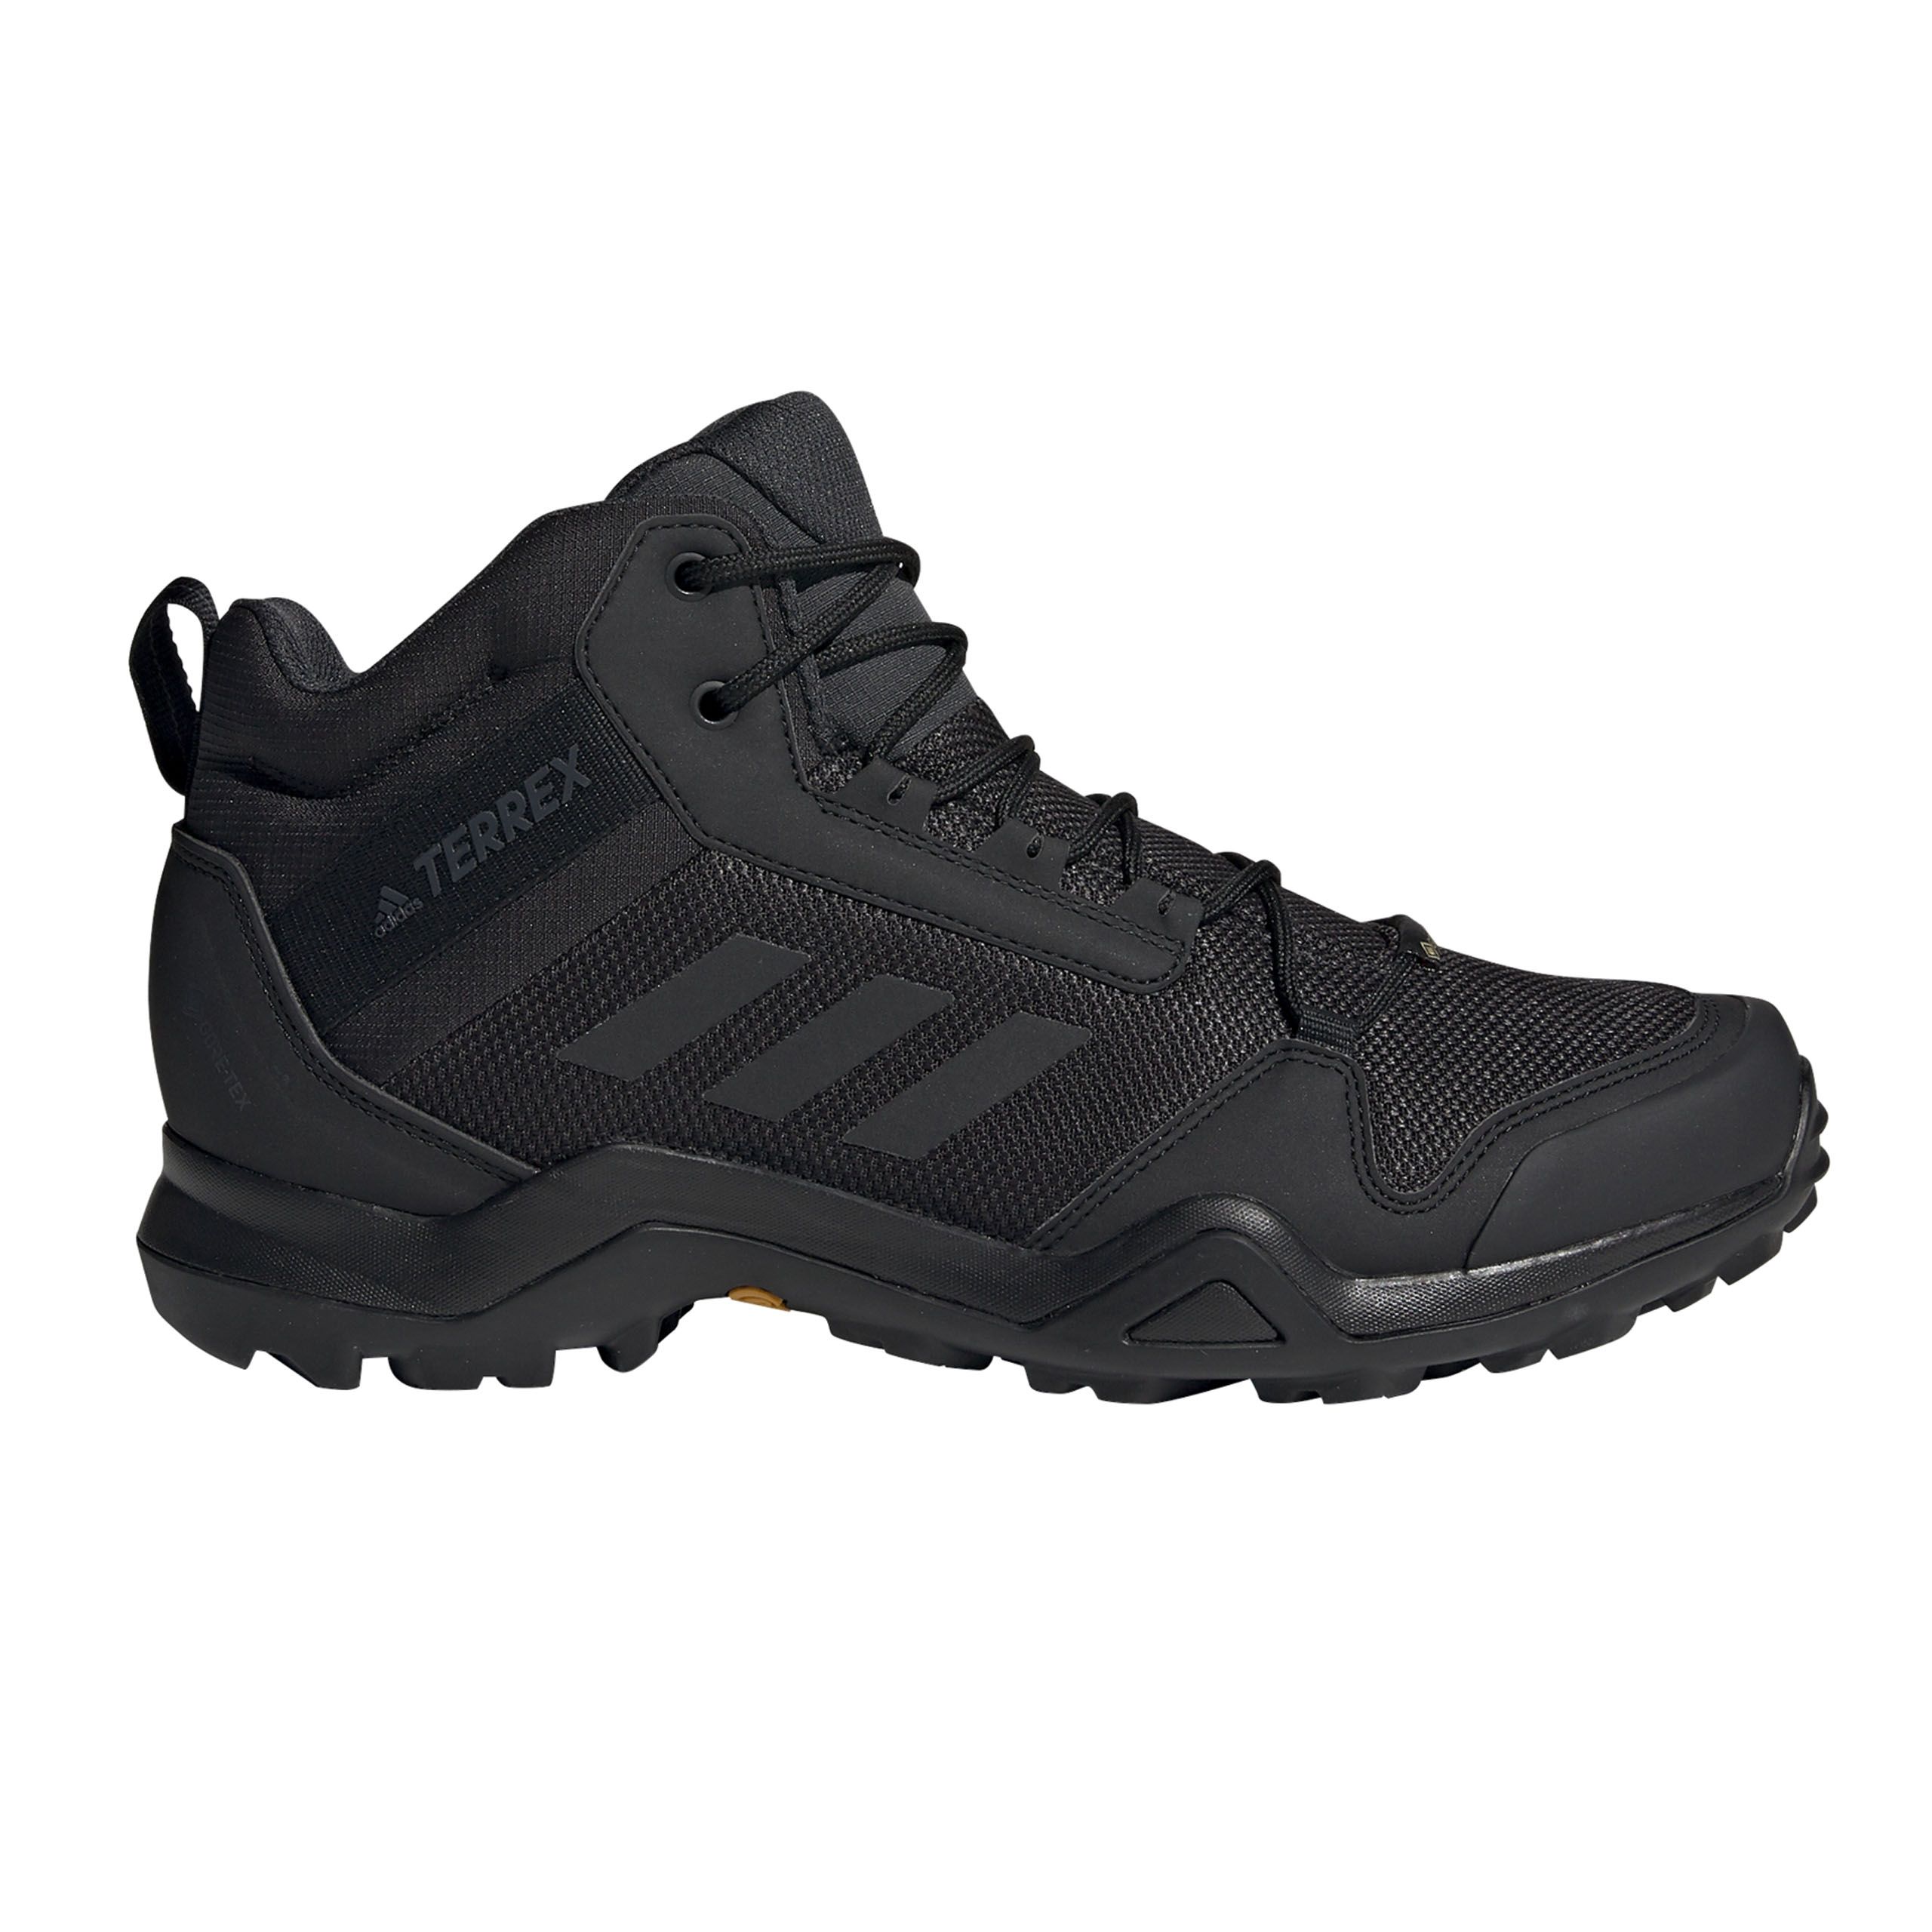 Adidas Mens Terrex Ax3 Mid Gore-tex Hiking Shoes